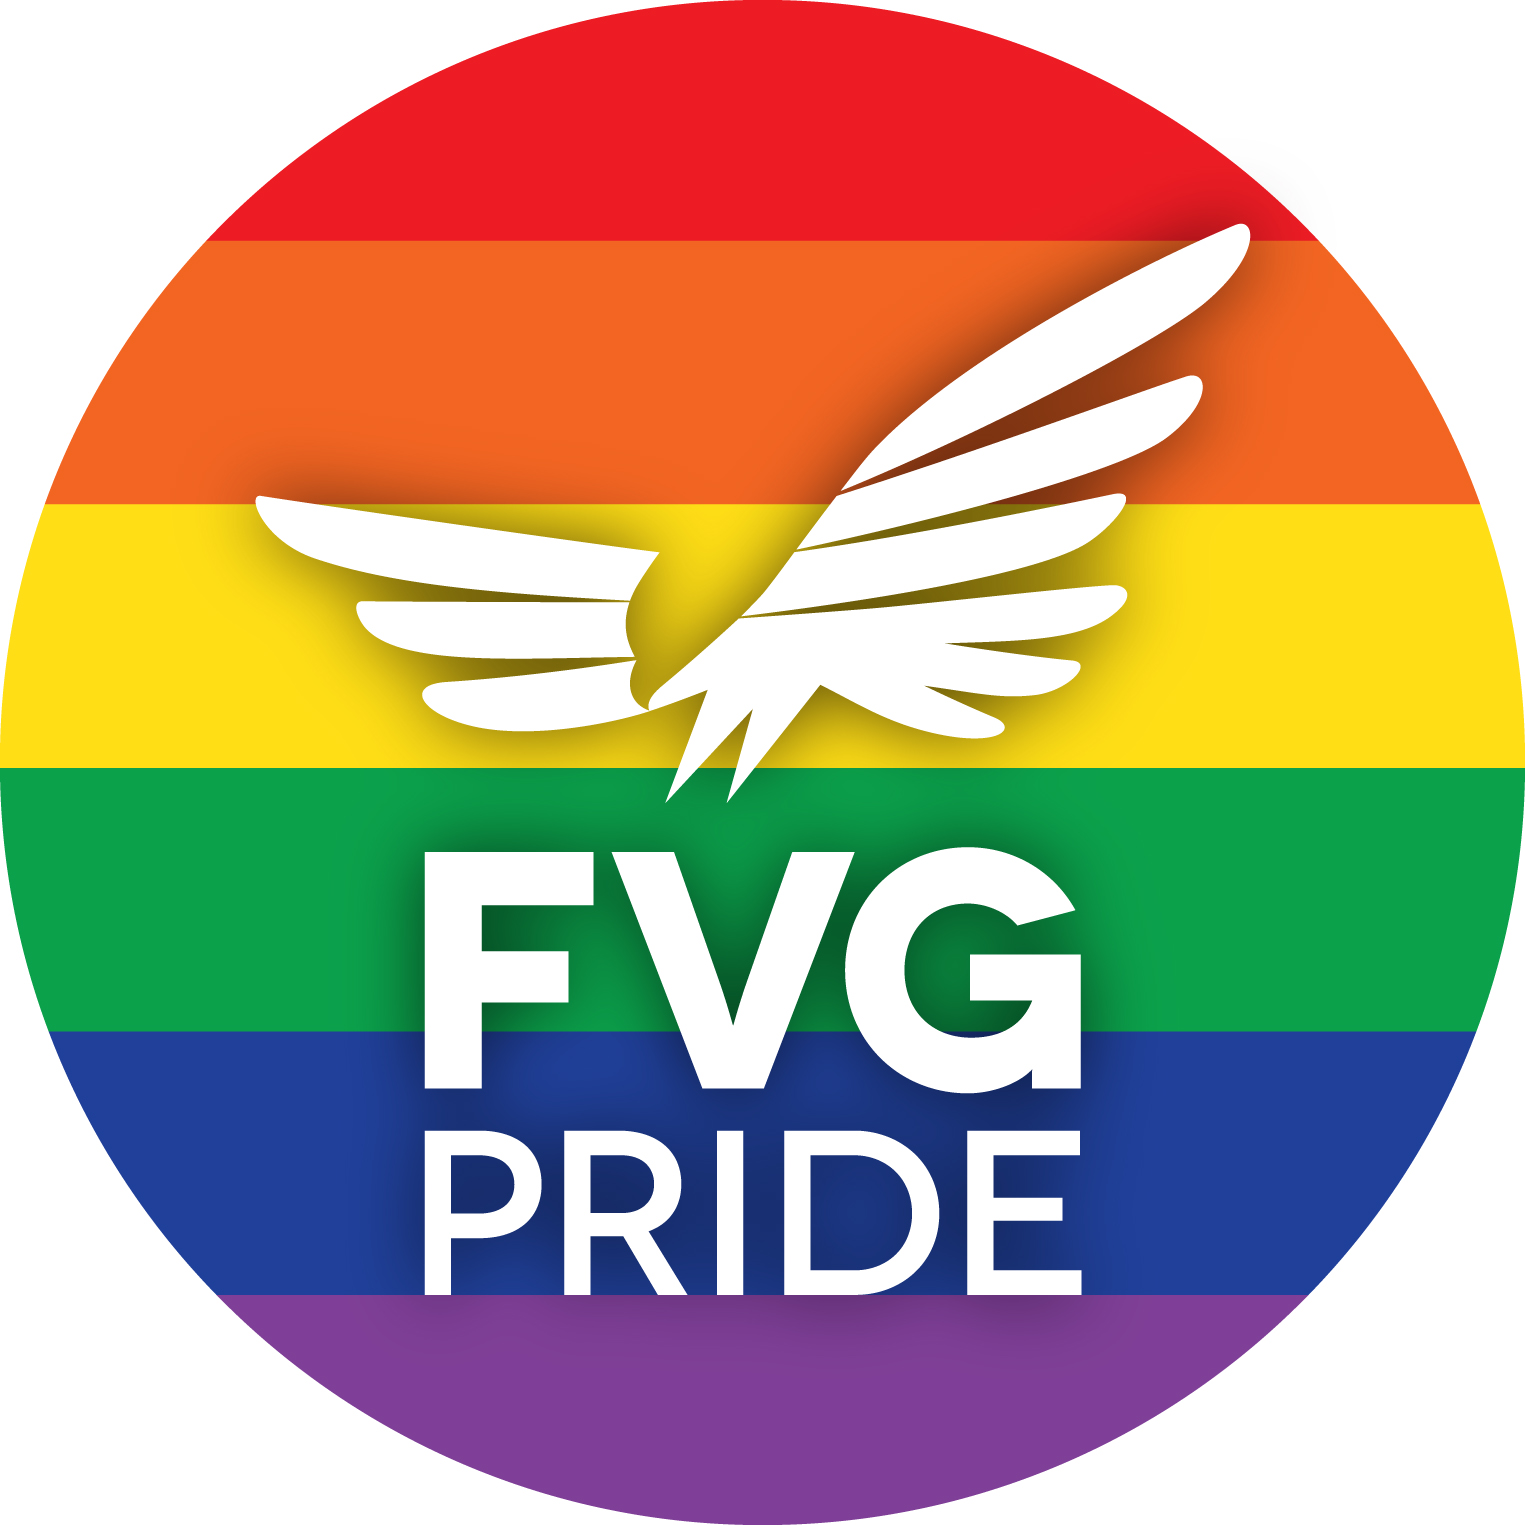 Gorizia sede del PrideFVG: noi ne siamo felici